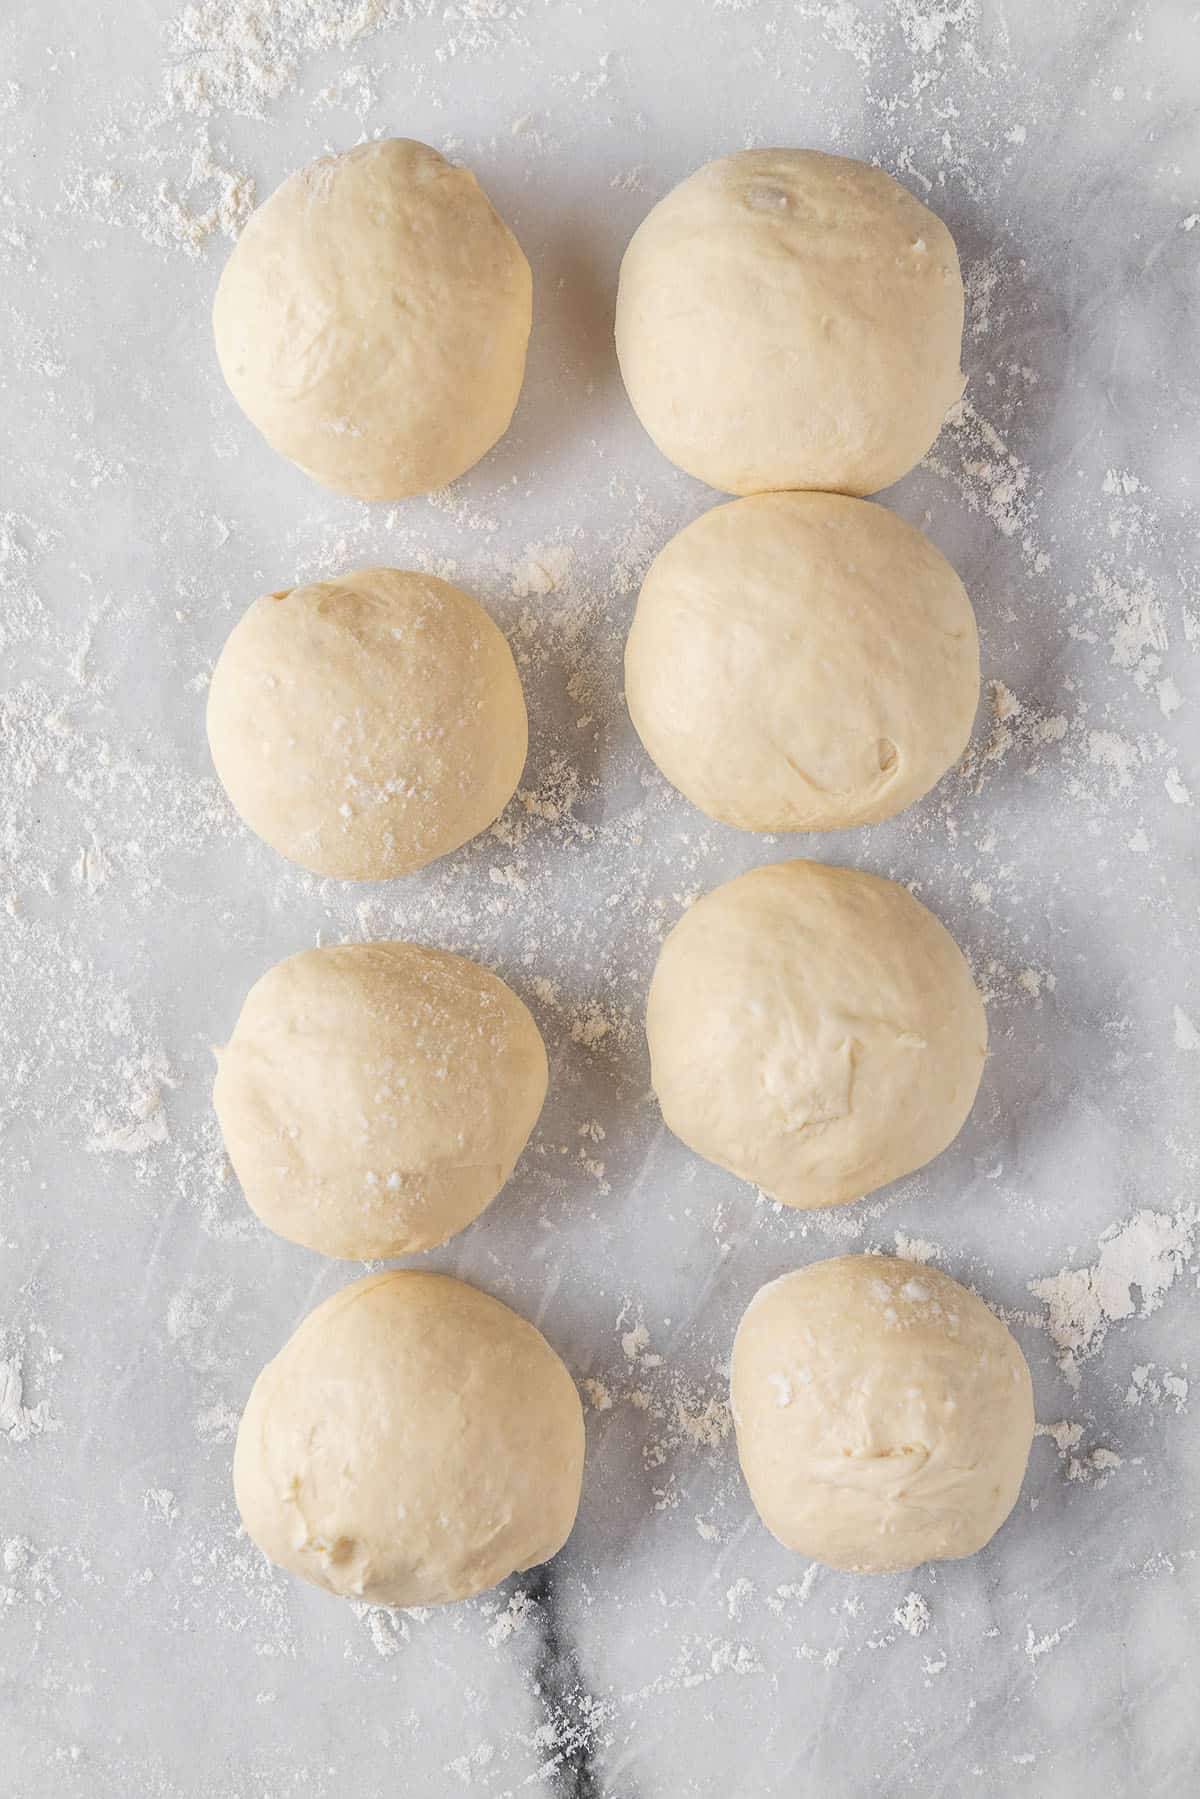 pita bread dough rising on marble board